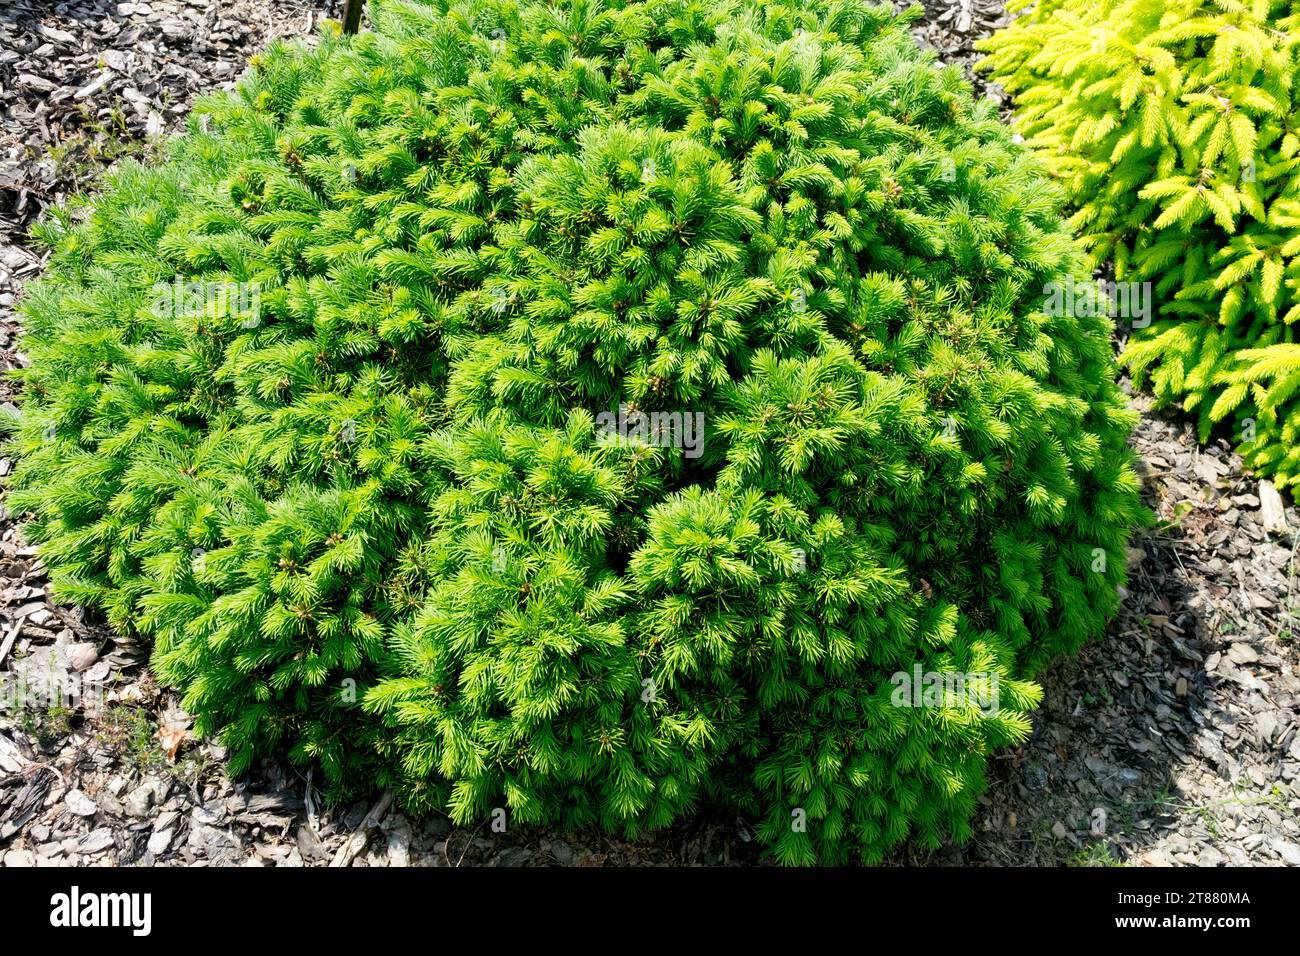 Garden, Conifer, Dwarf, Low, Tiny, Tree, Norway spruce, Picea abies 'Gregoriana' Stock Photo